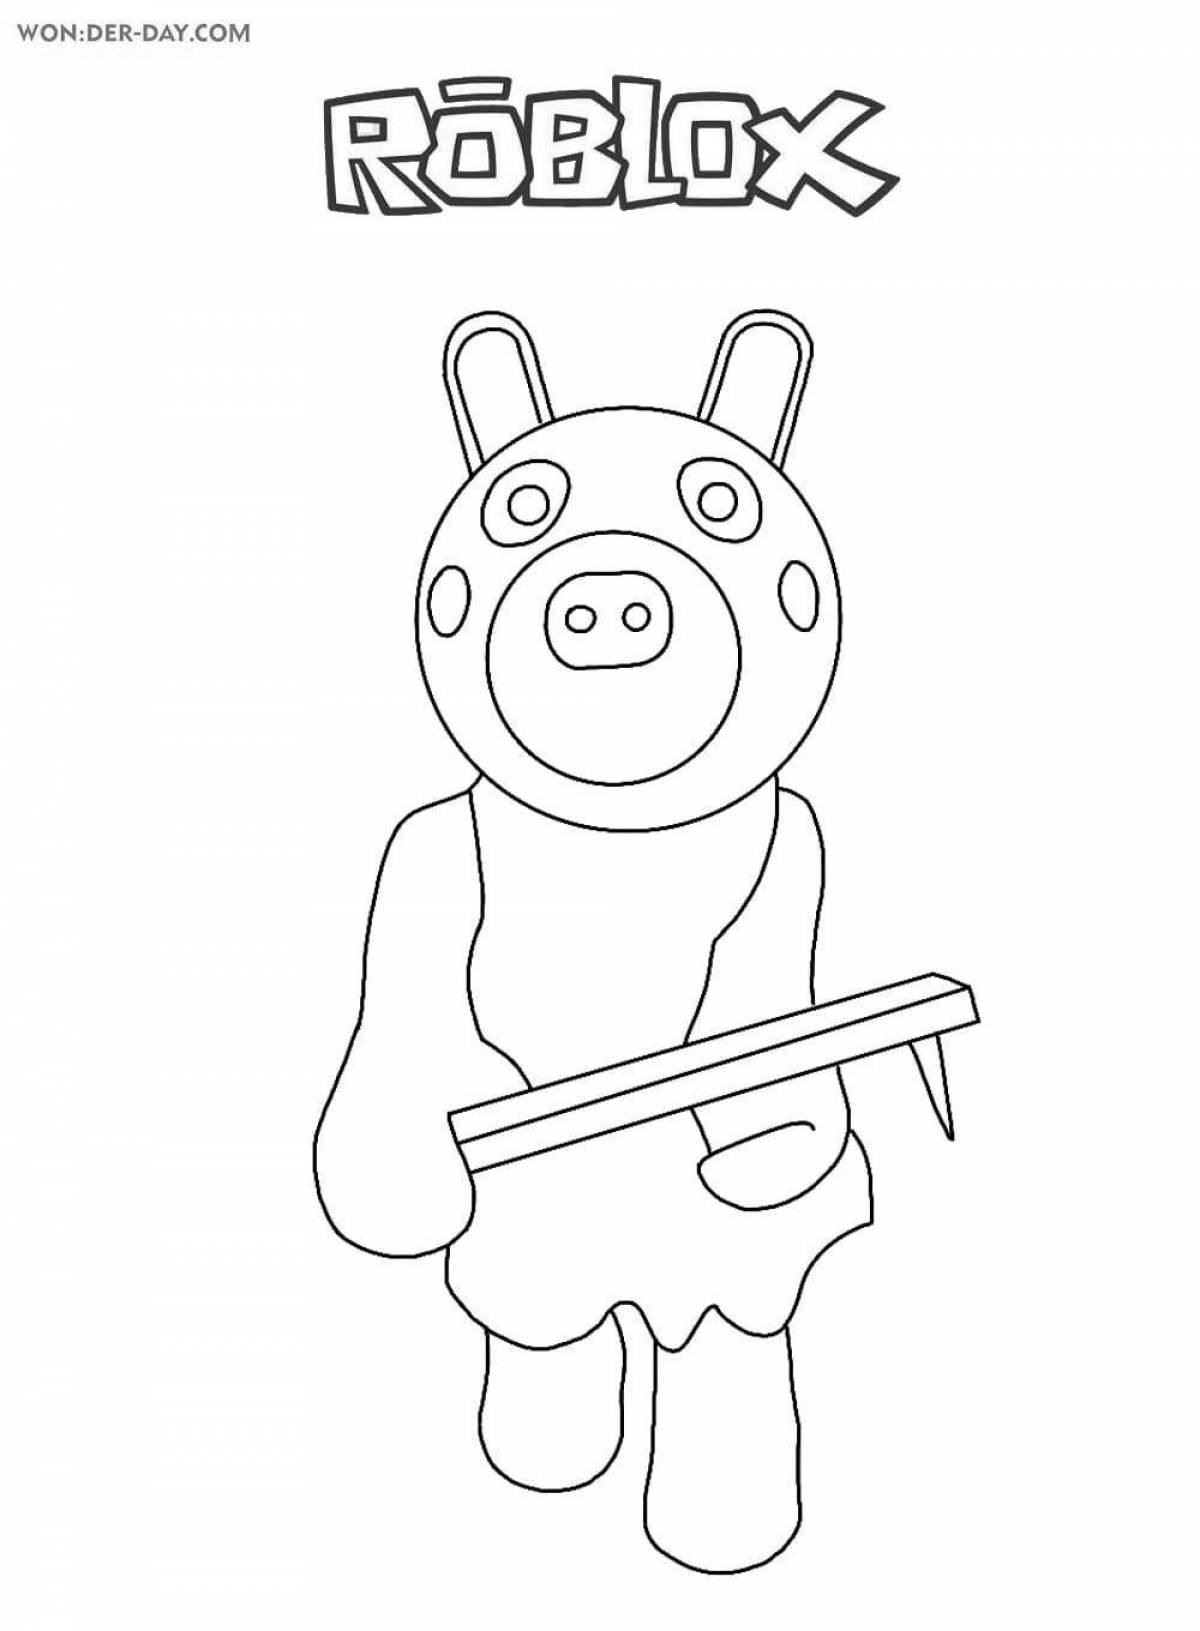 Roblox fun pig coloring page